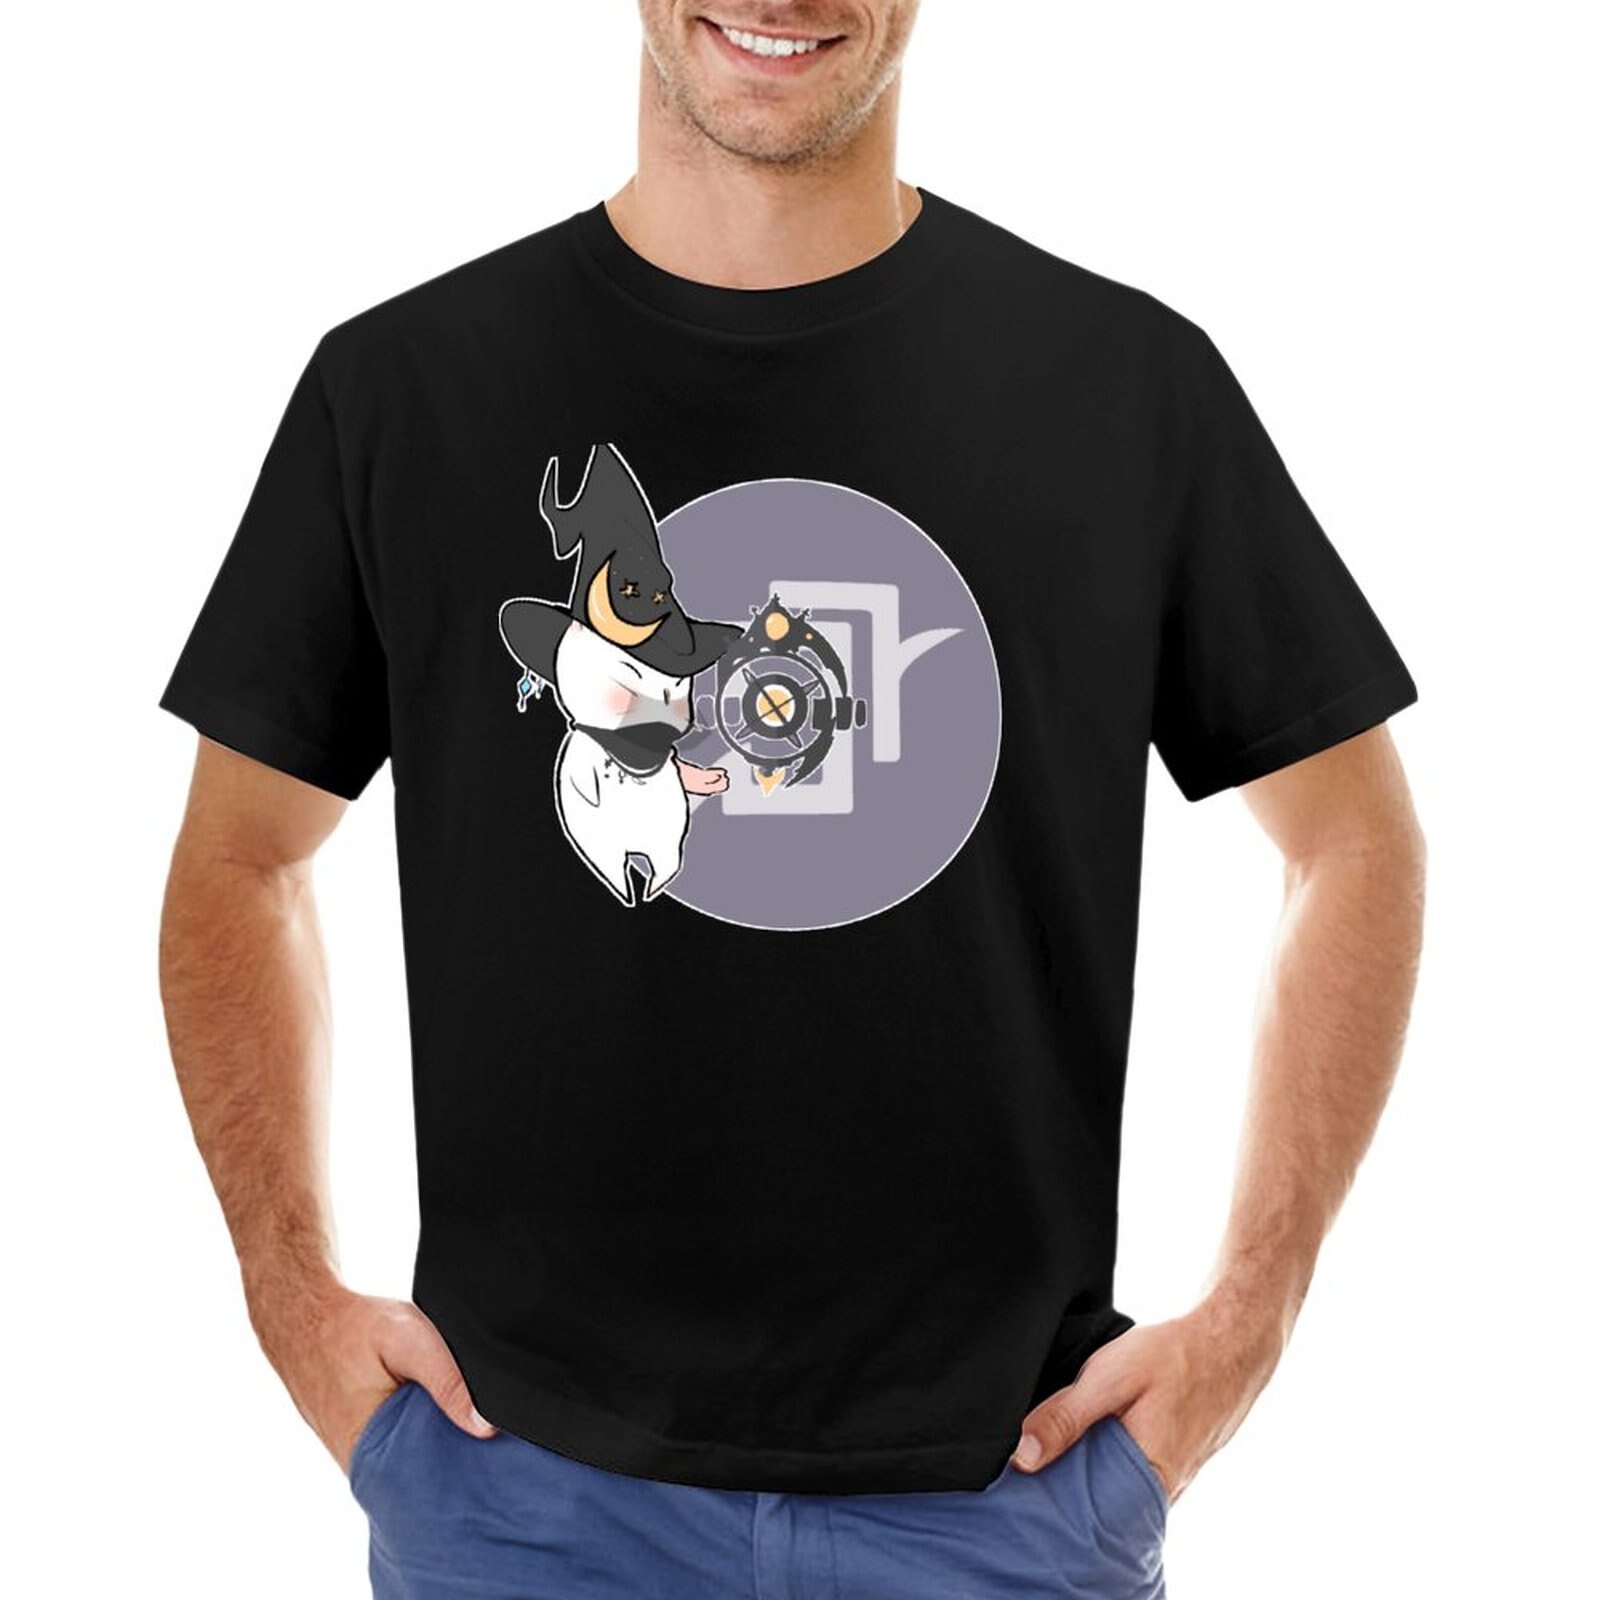 ASTROLOGIAN MOOGLE FFXIV T-Shirt tops tees t shirts for men